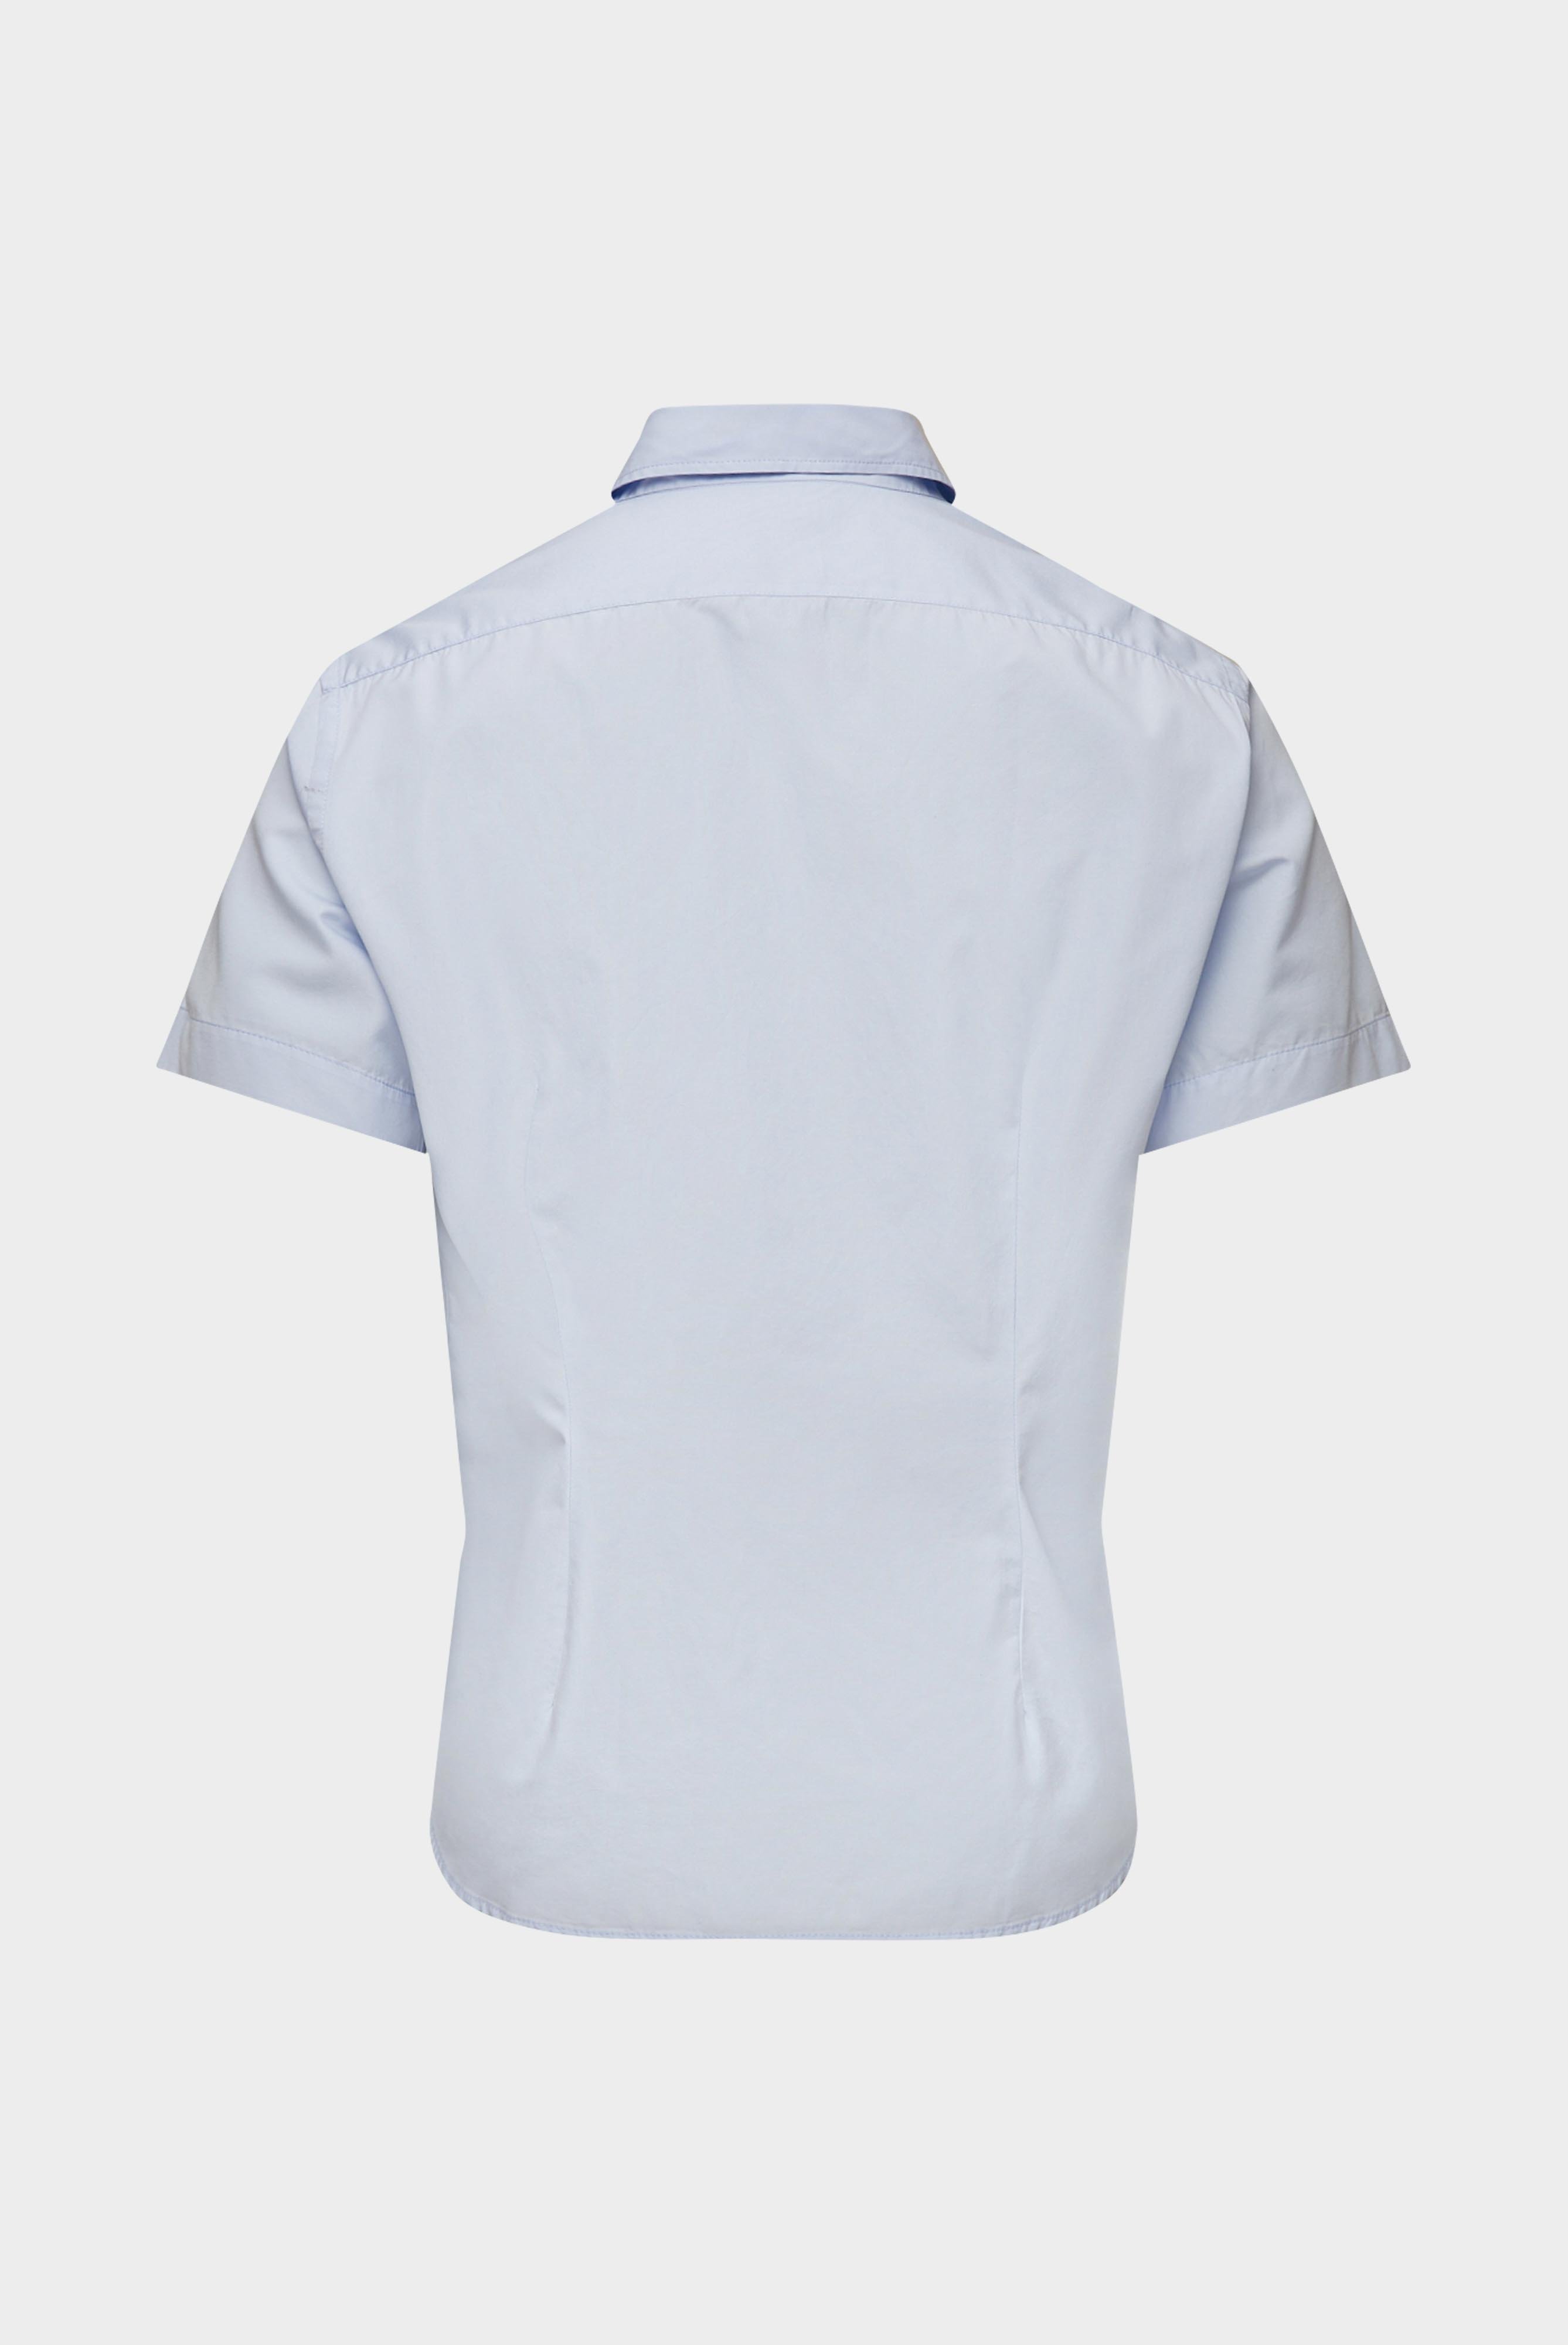 Casual Hemden+Kurzarm Hemd aus Baumwollpopeline+20.2053.Q2.130648.715.41